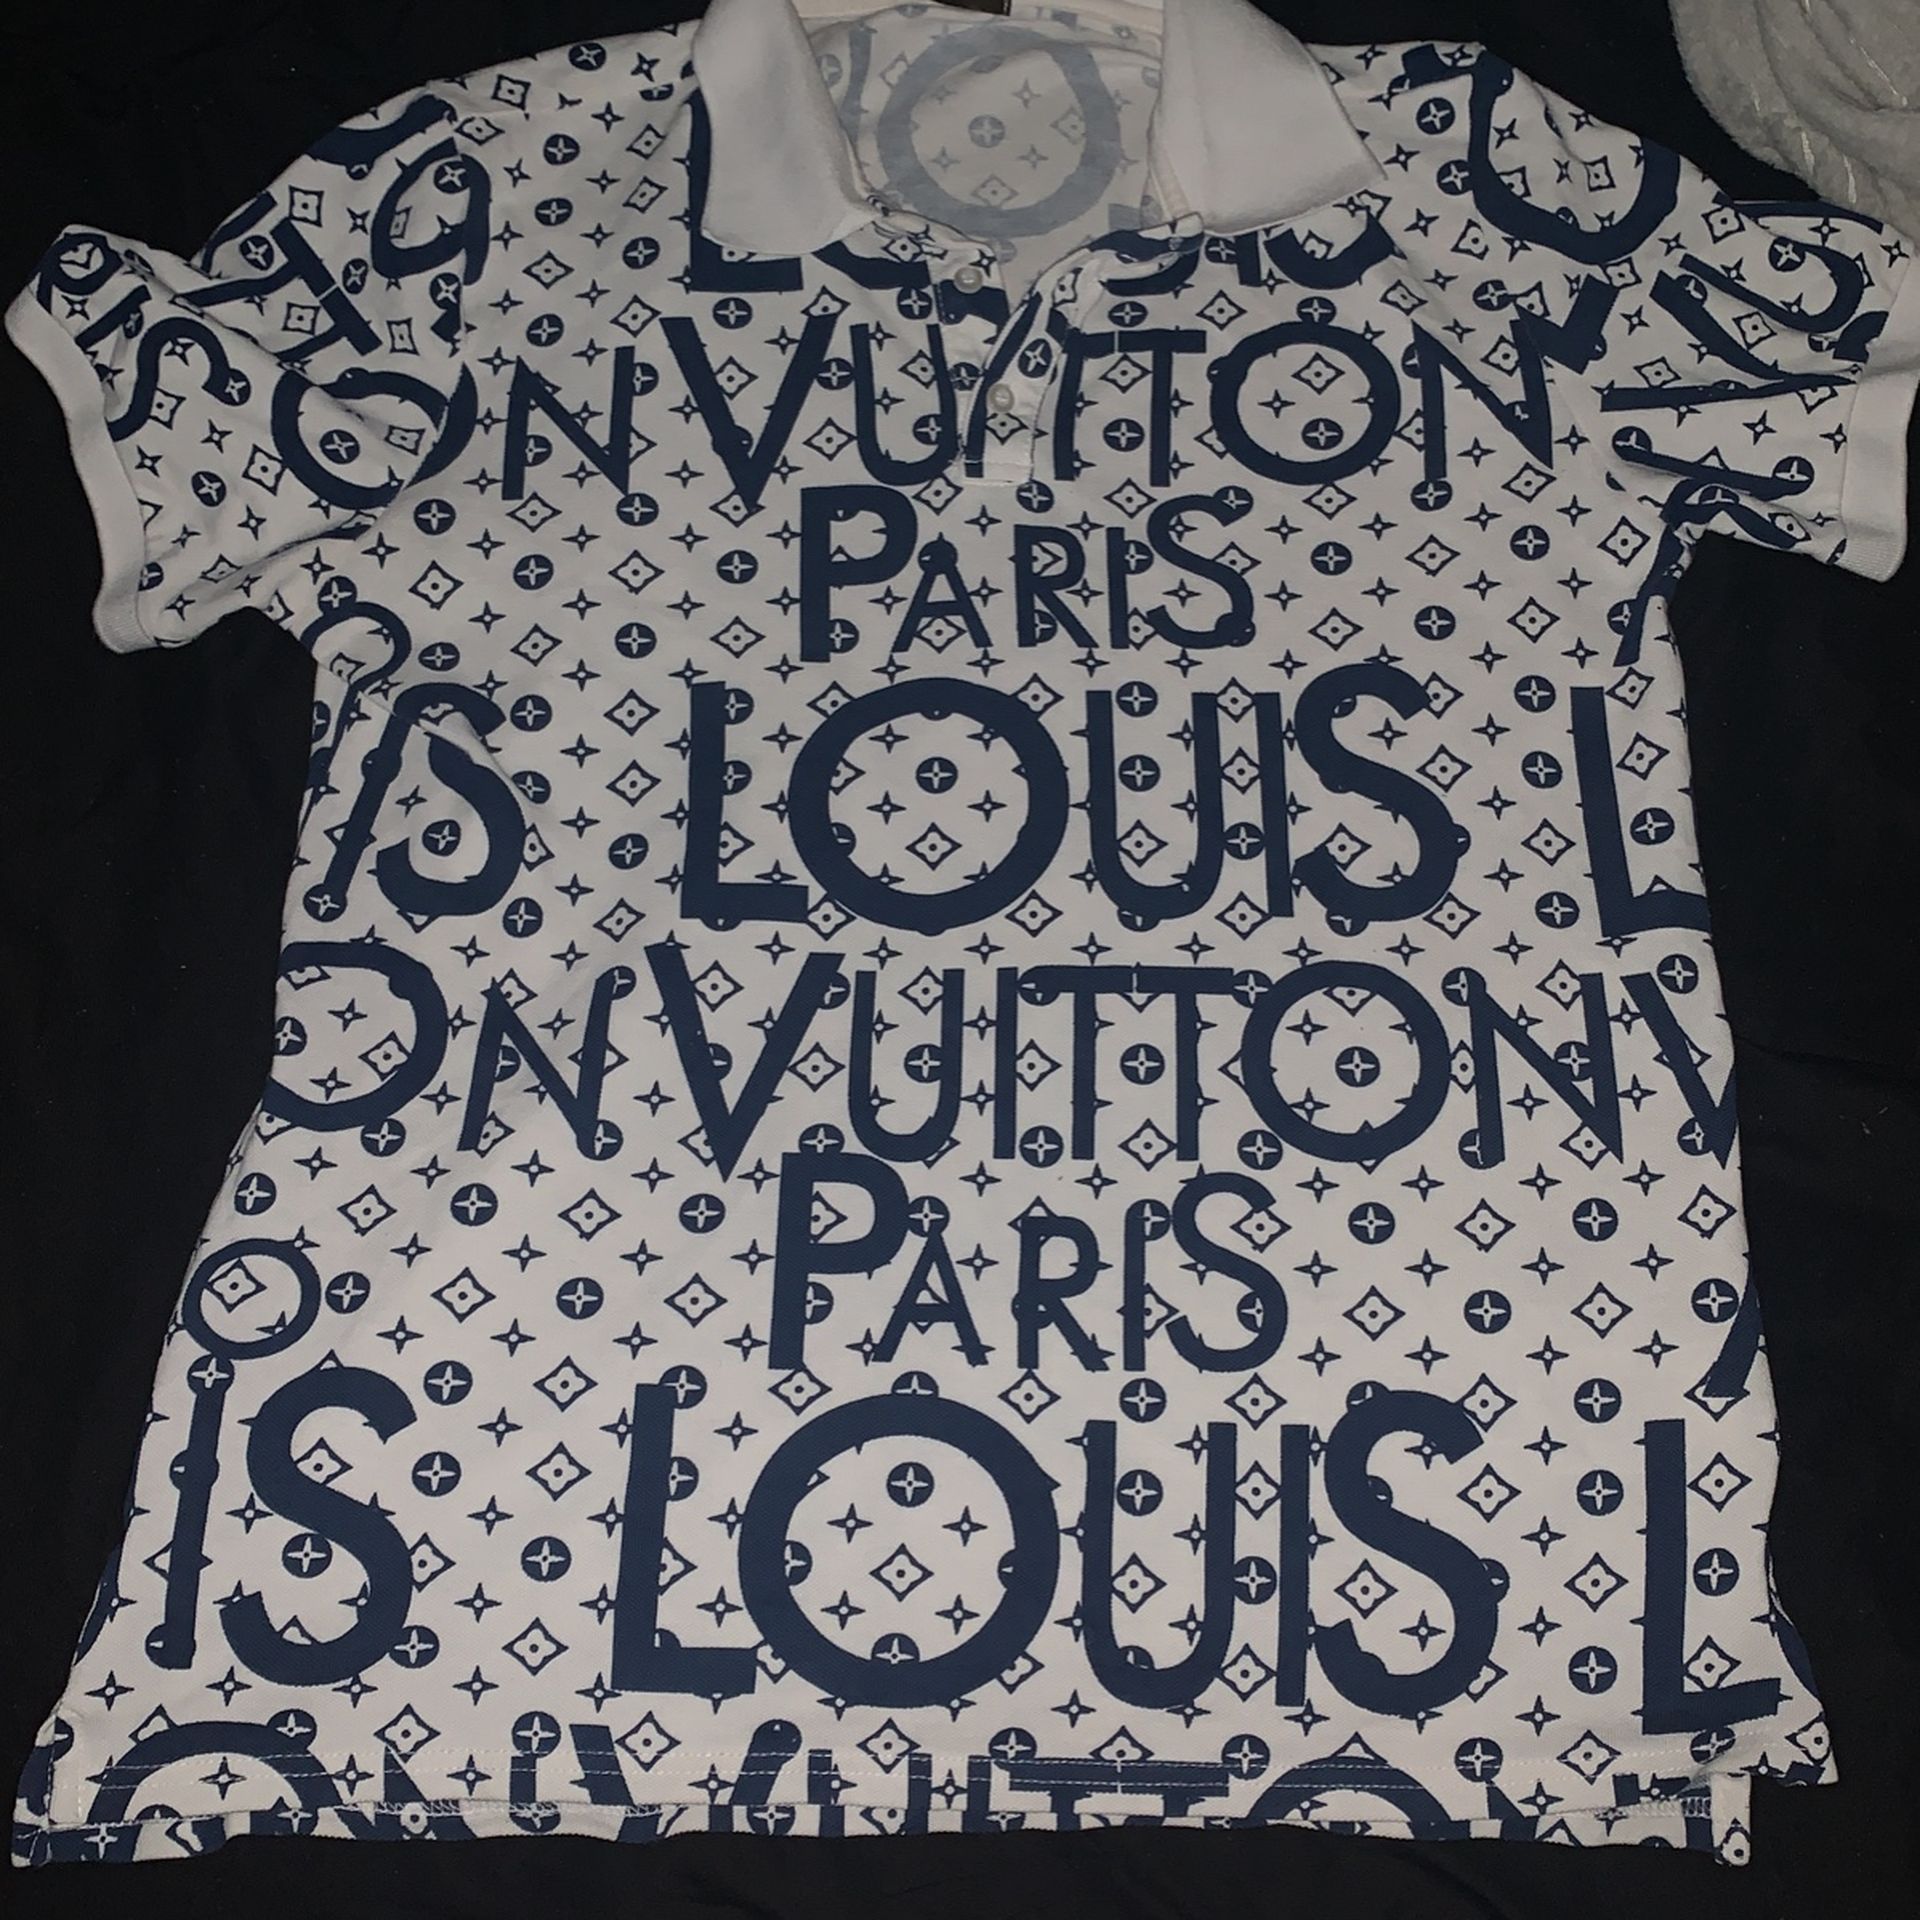 Louis Vuitton Shirt